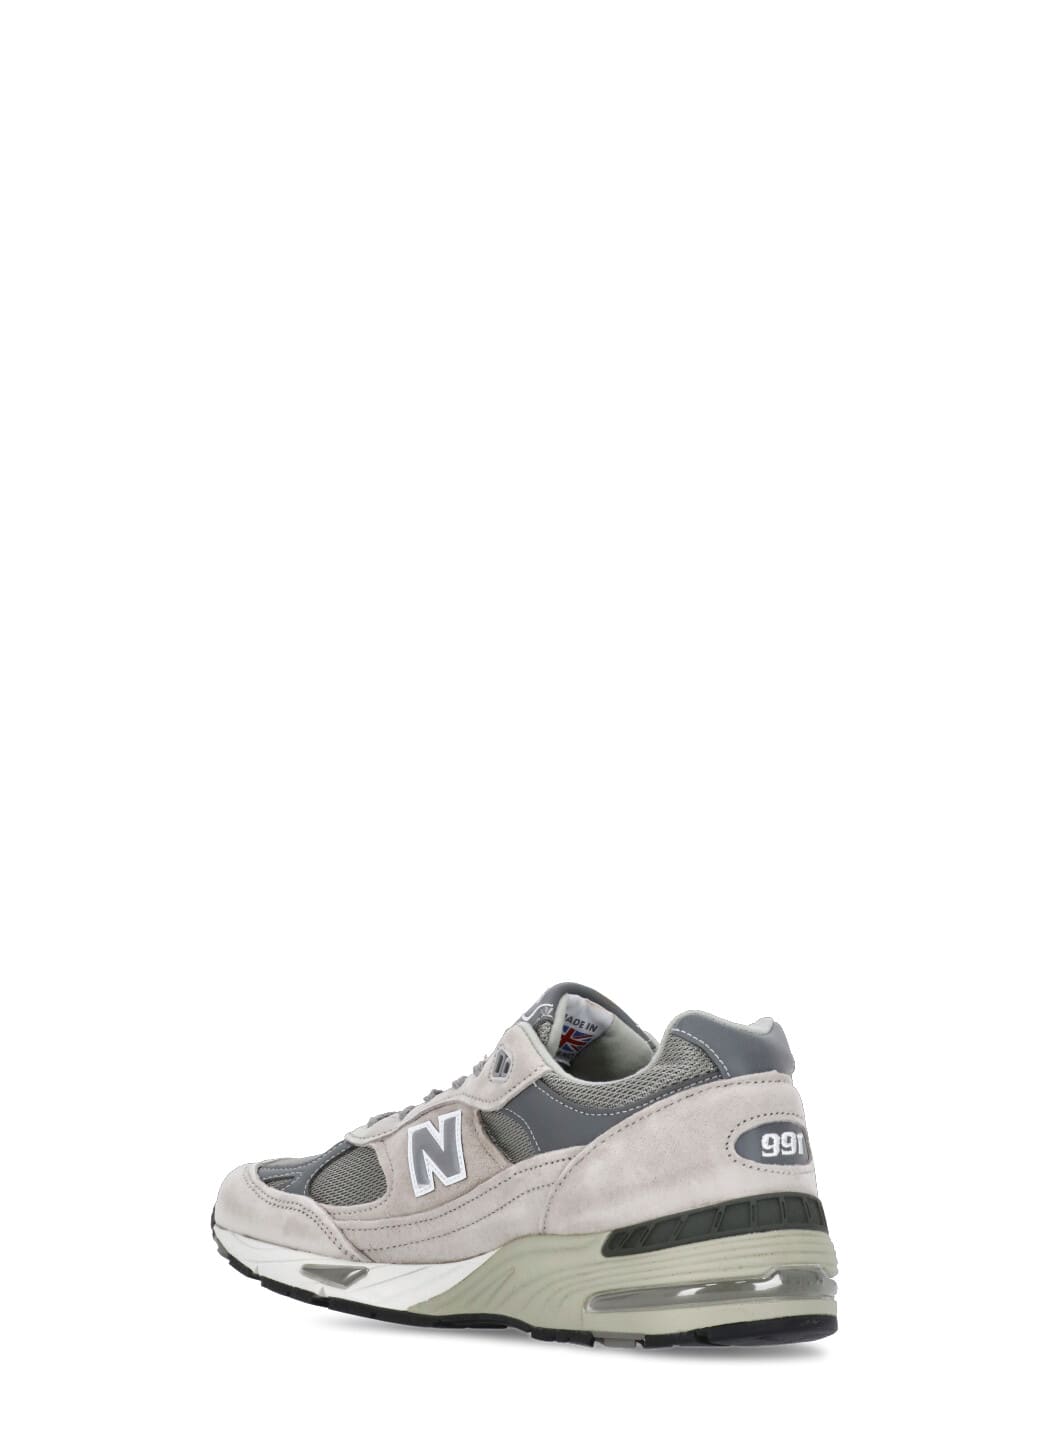 Shop New Balance 991 Sneakers In Beige